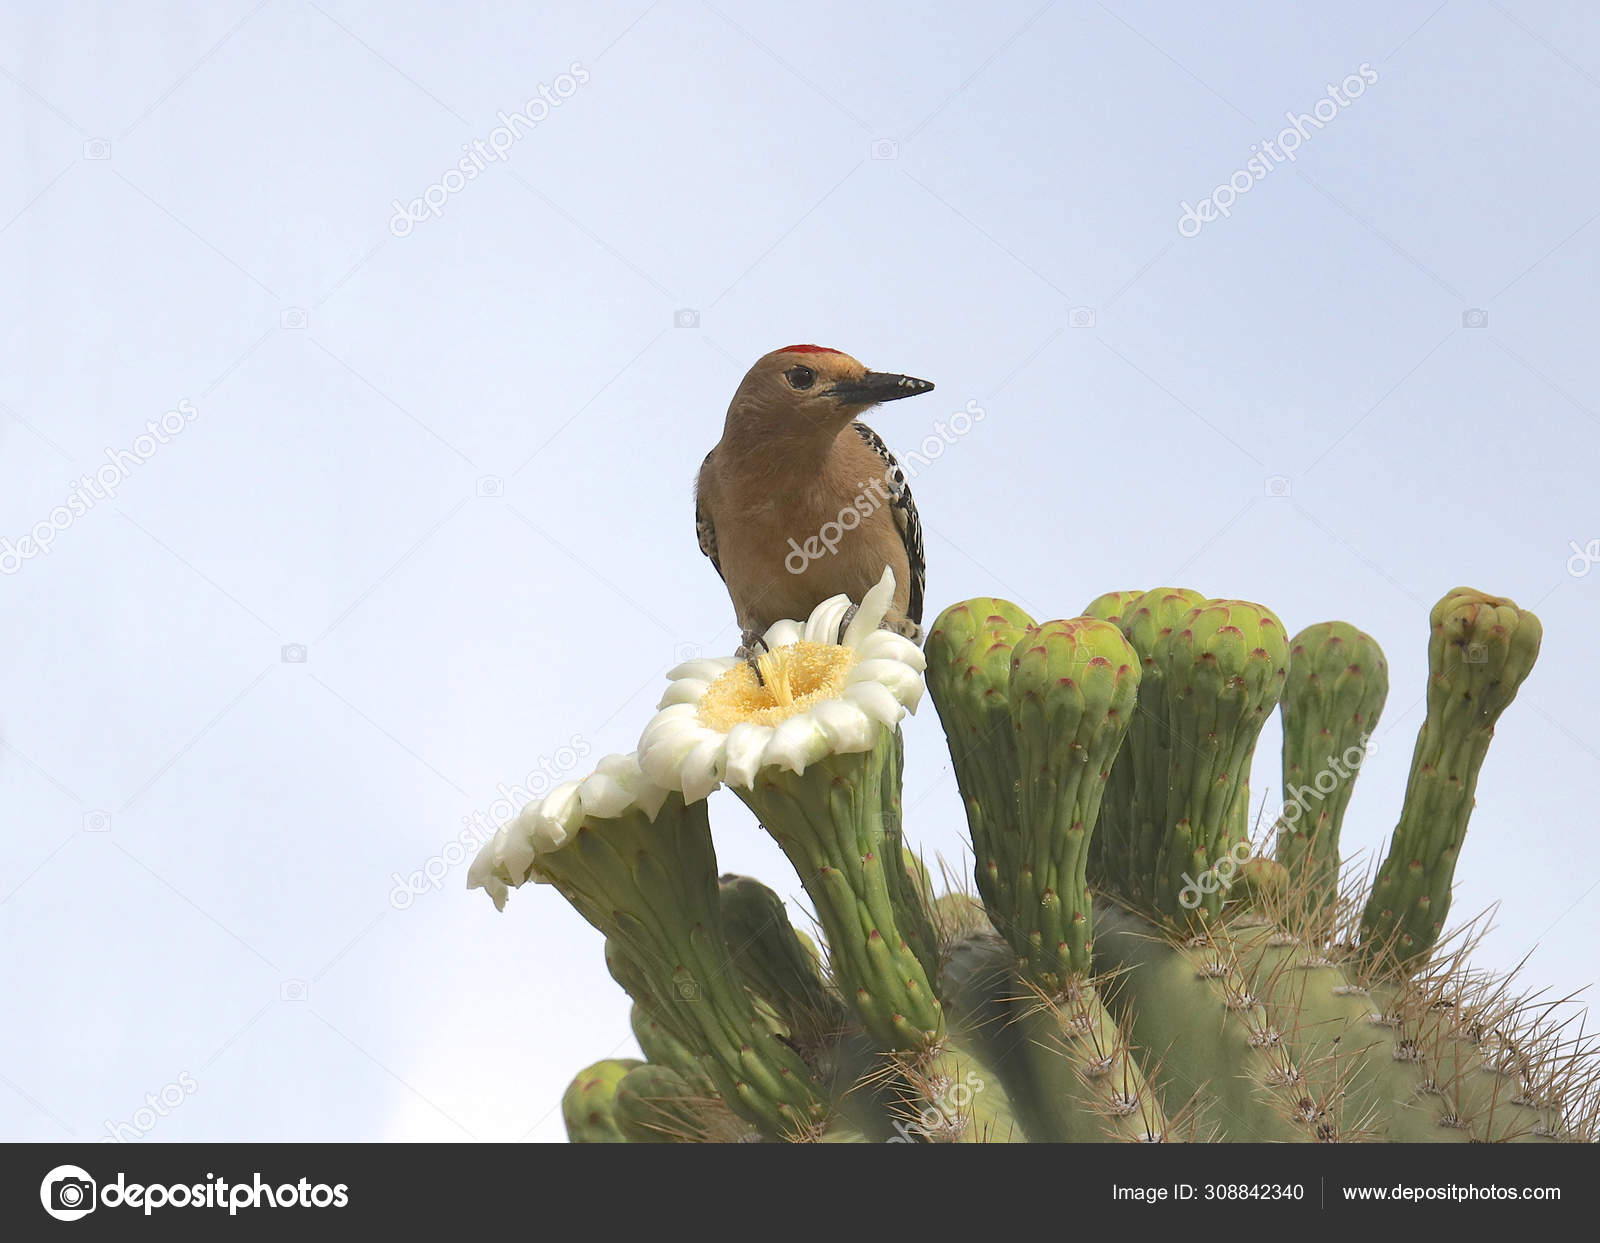 Gila Woodpecker Male Eating Saguaro Cactus Blossom Stock Photo C Vagabond54 308842340